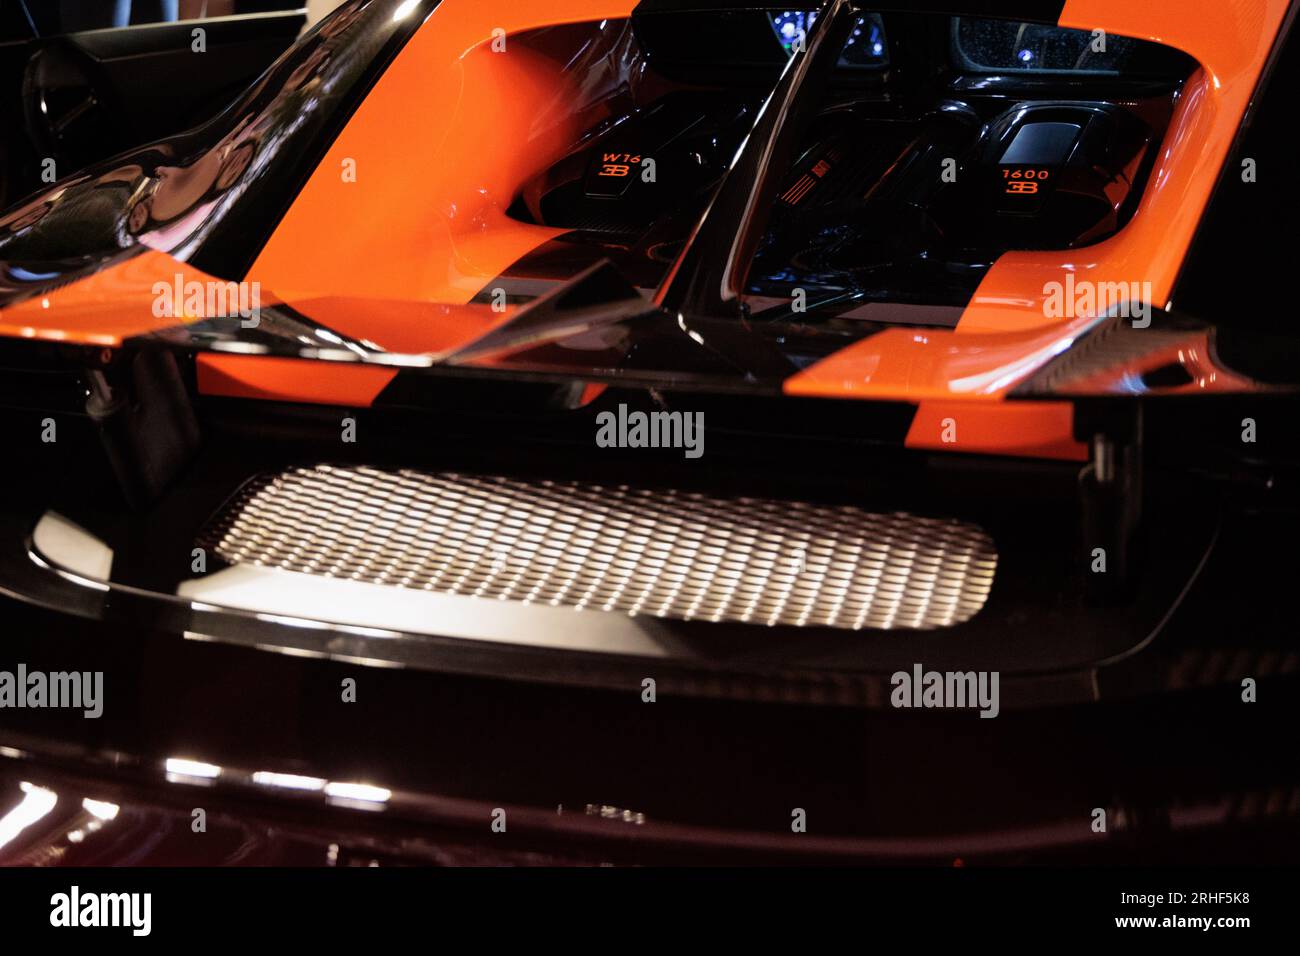 Bugatti Chiron pur sport 300+ rear view of it's 1,600 PS quad-turbocharged W16 engine Stock Photo